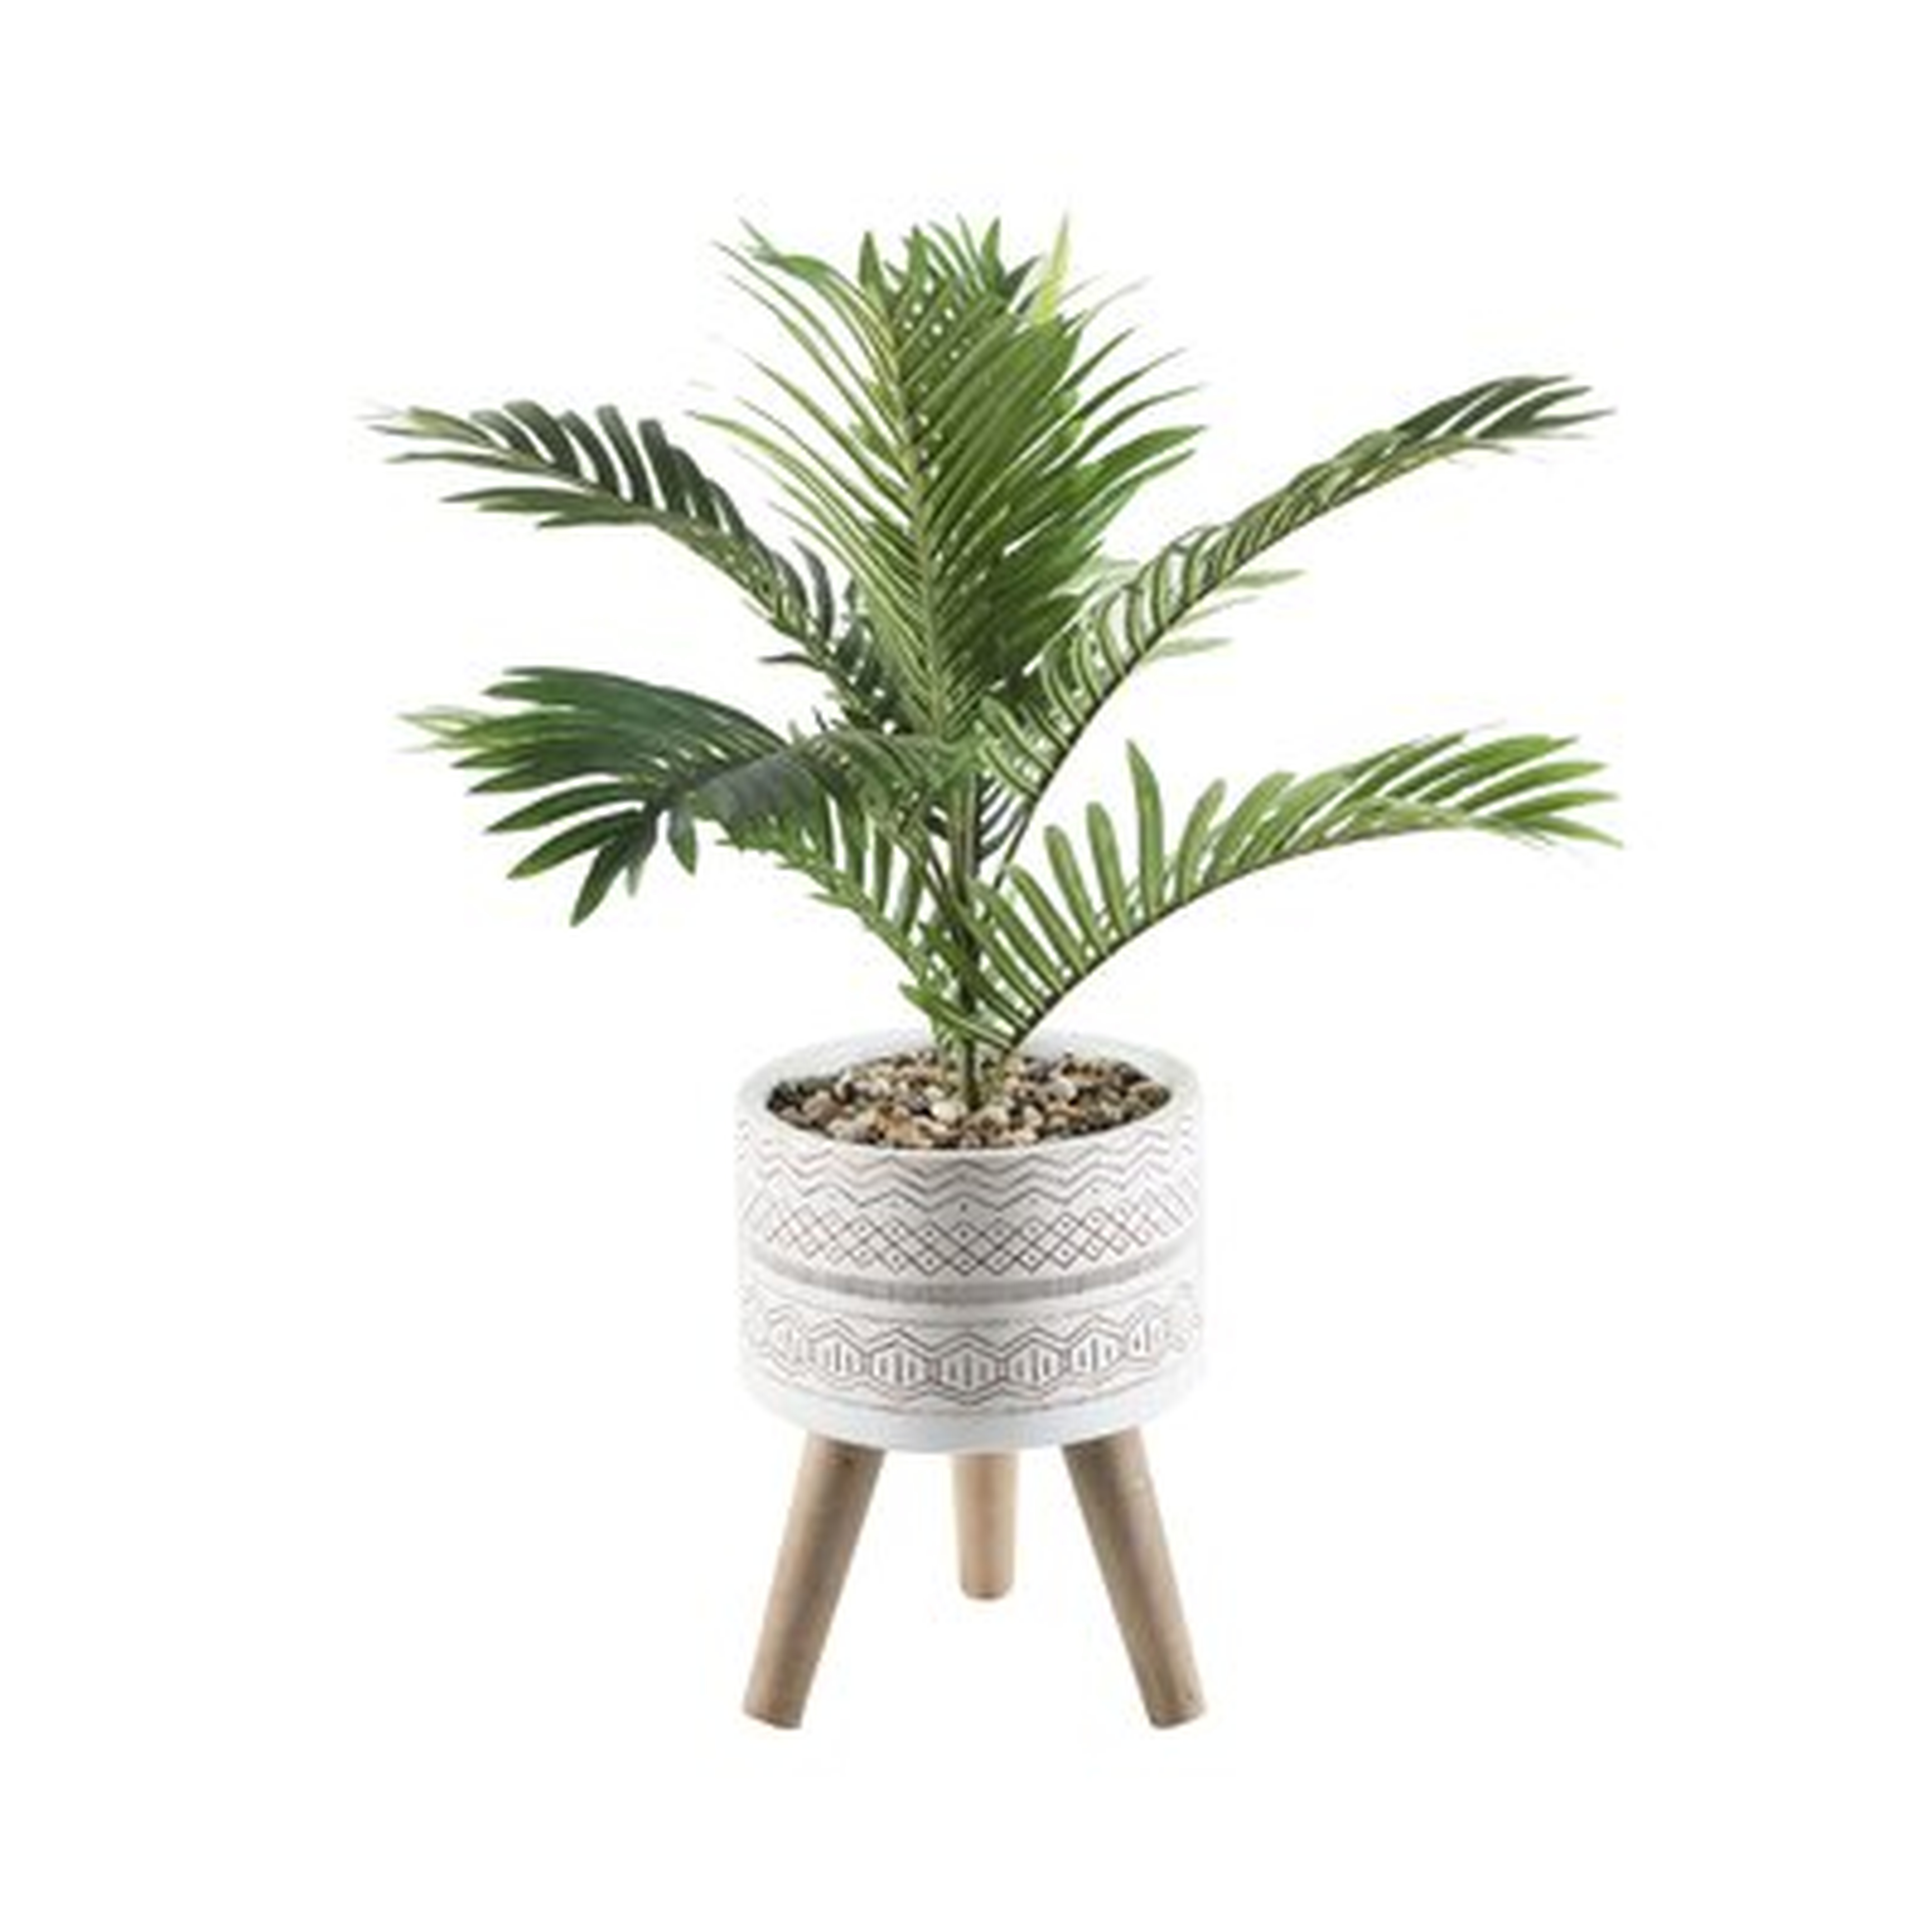 Artificial Palm Plant in Pot - Wayfair